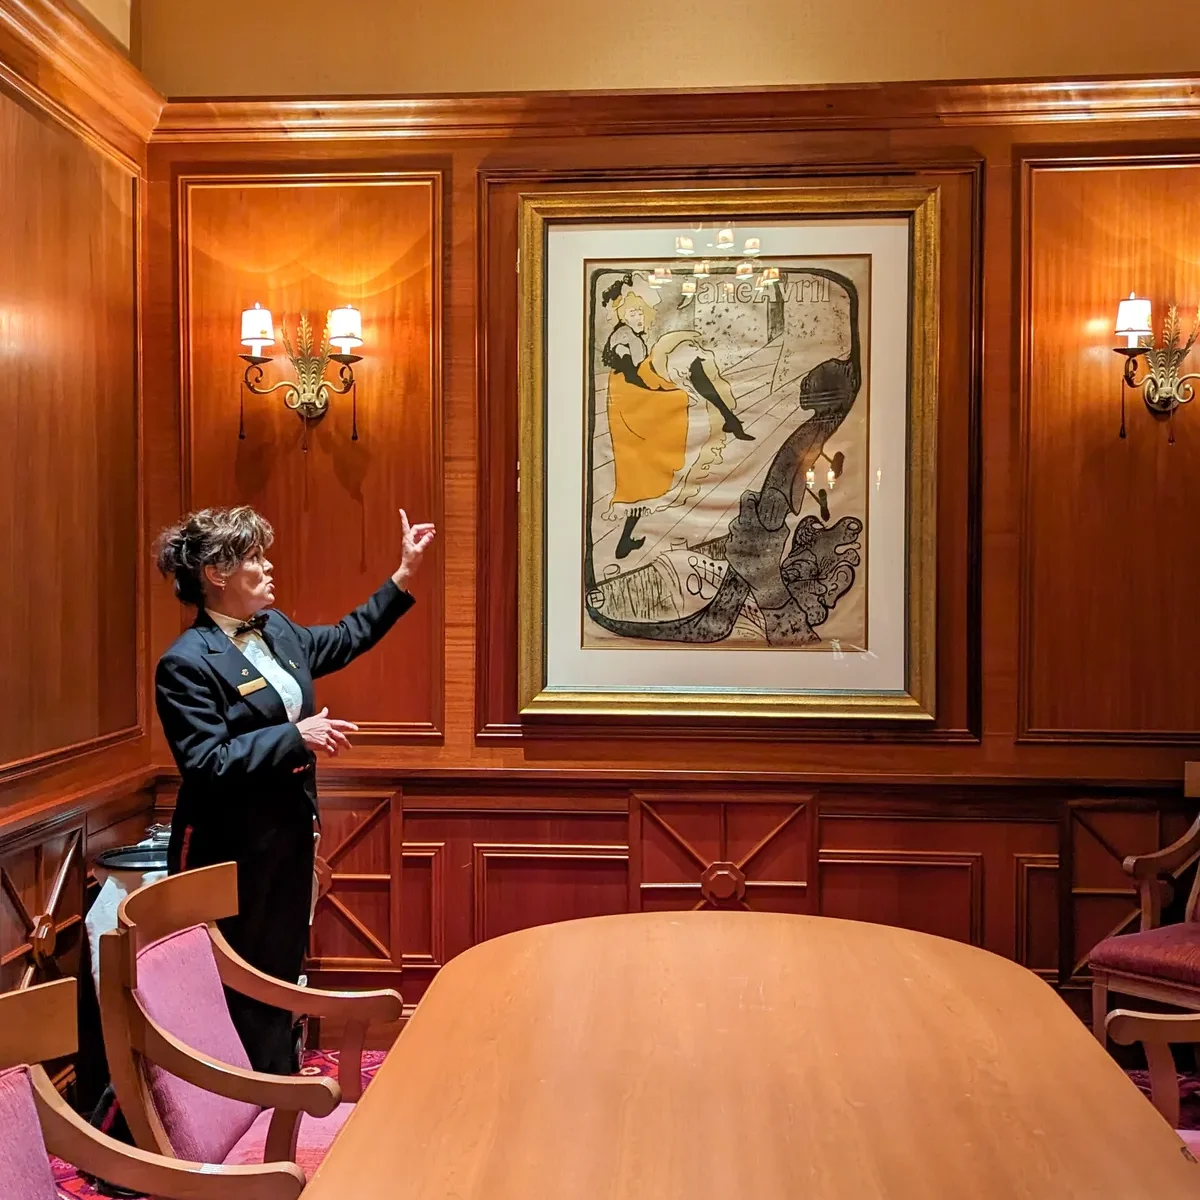 Lisa, the server at Lautrec, conducting an art tour after dinner. 